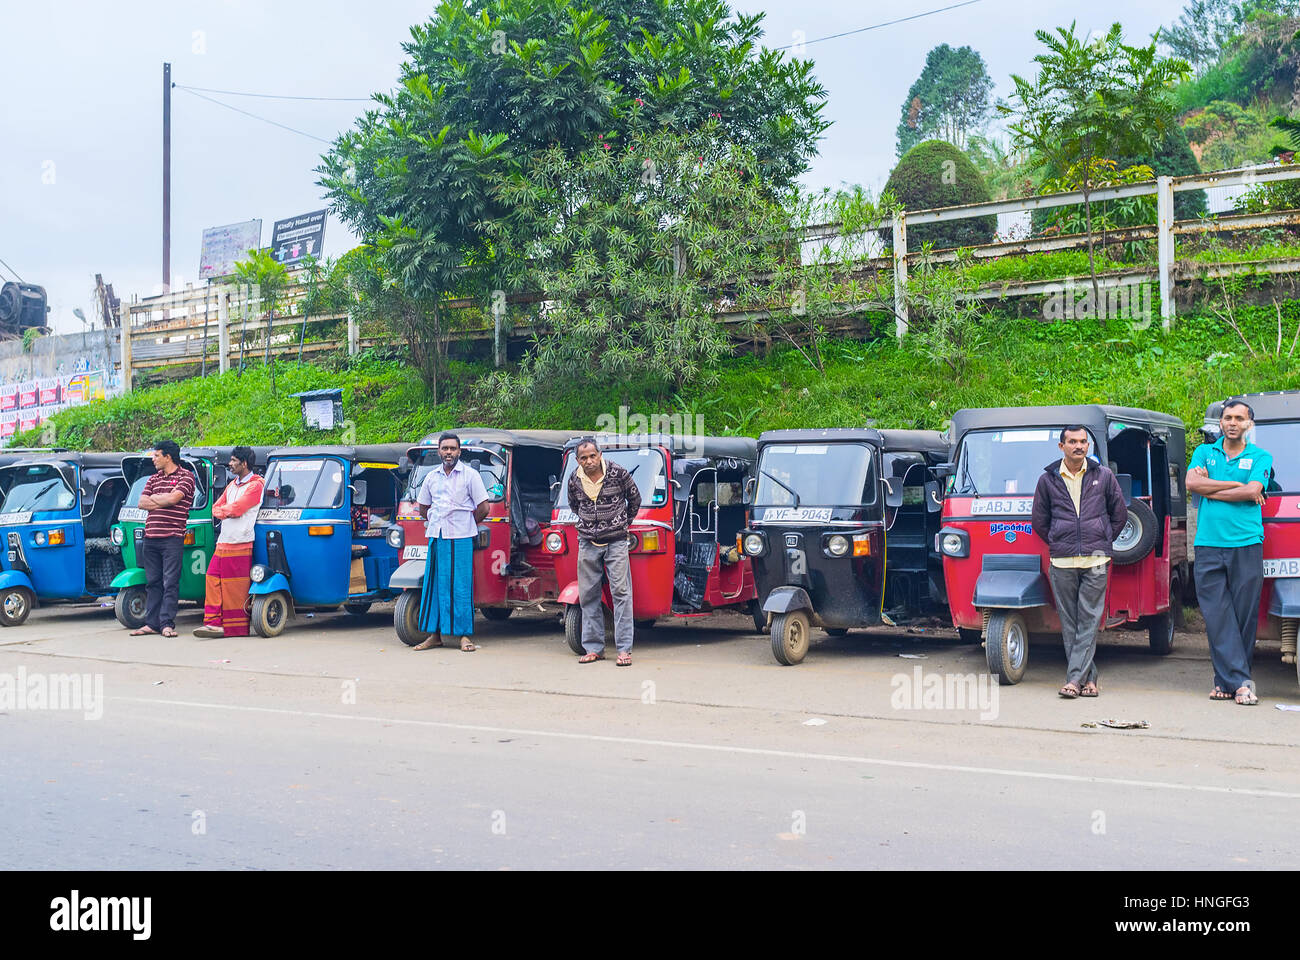 BANDARAWELA, SRI LANKA - 30. November 2016: die Reihe der Tuk-Tuk-Taxi am Eingang zum Zentrum der Stadt, am 30. November in Bandarawela Stockfoto